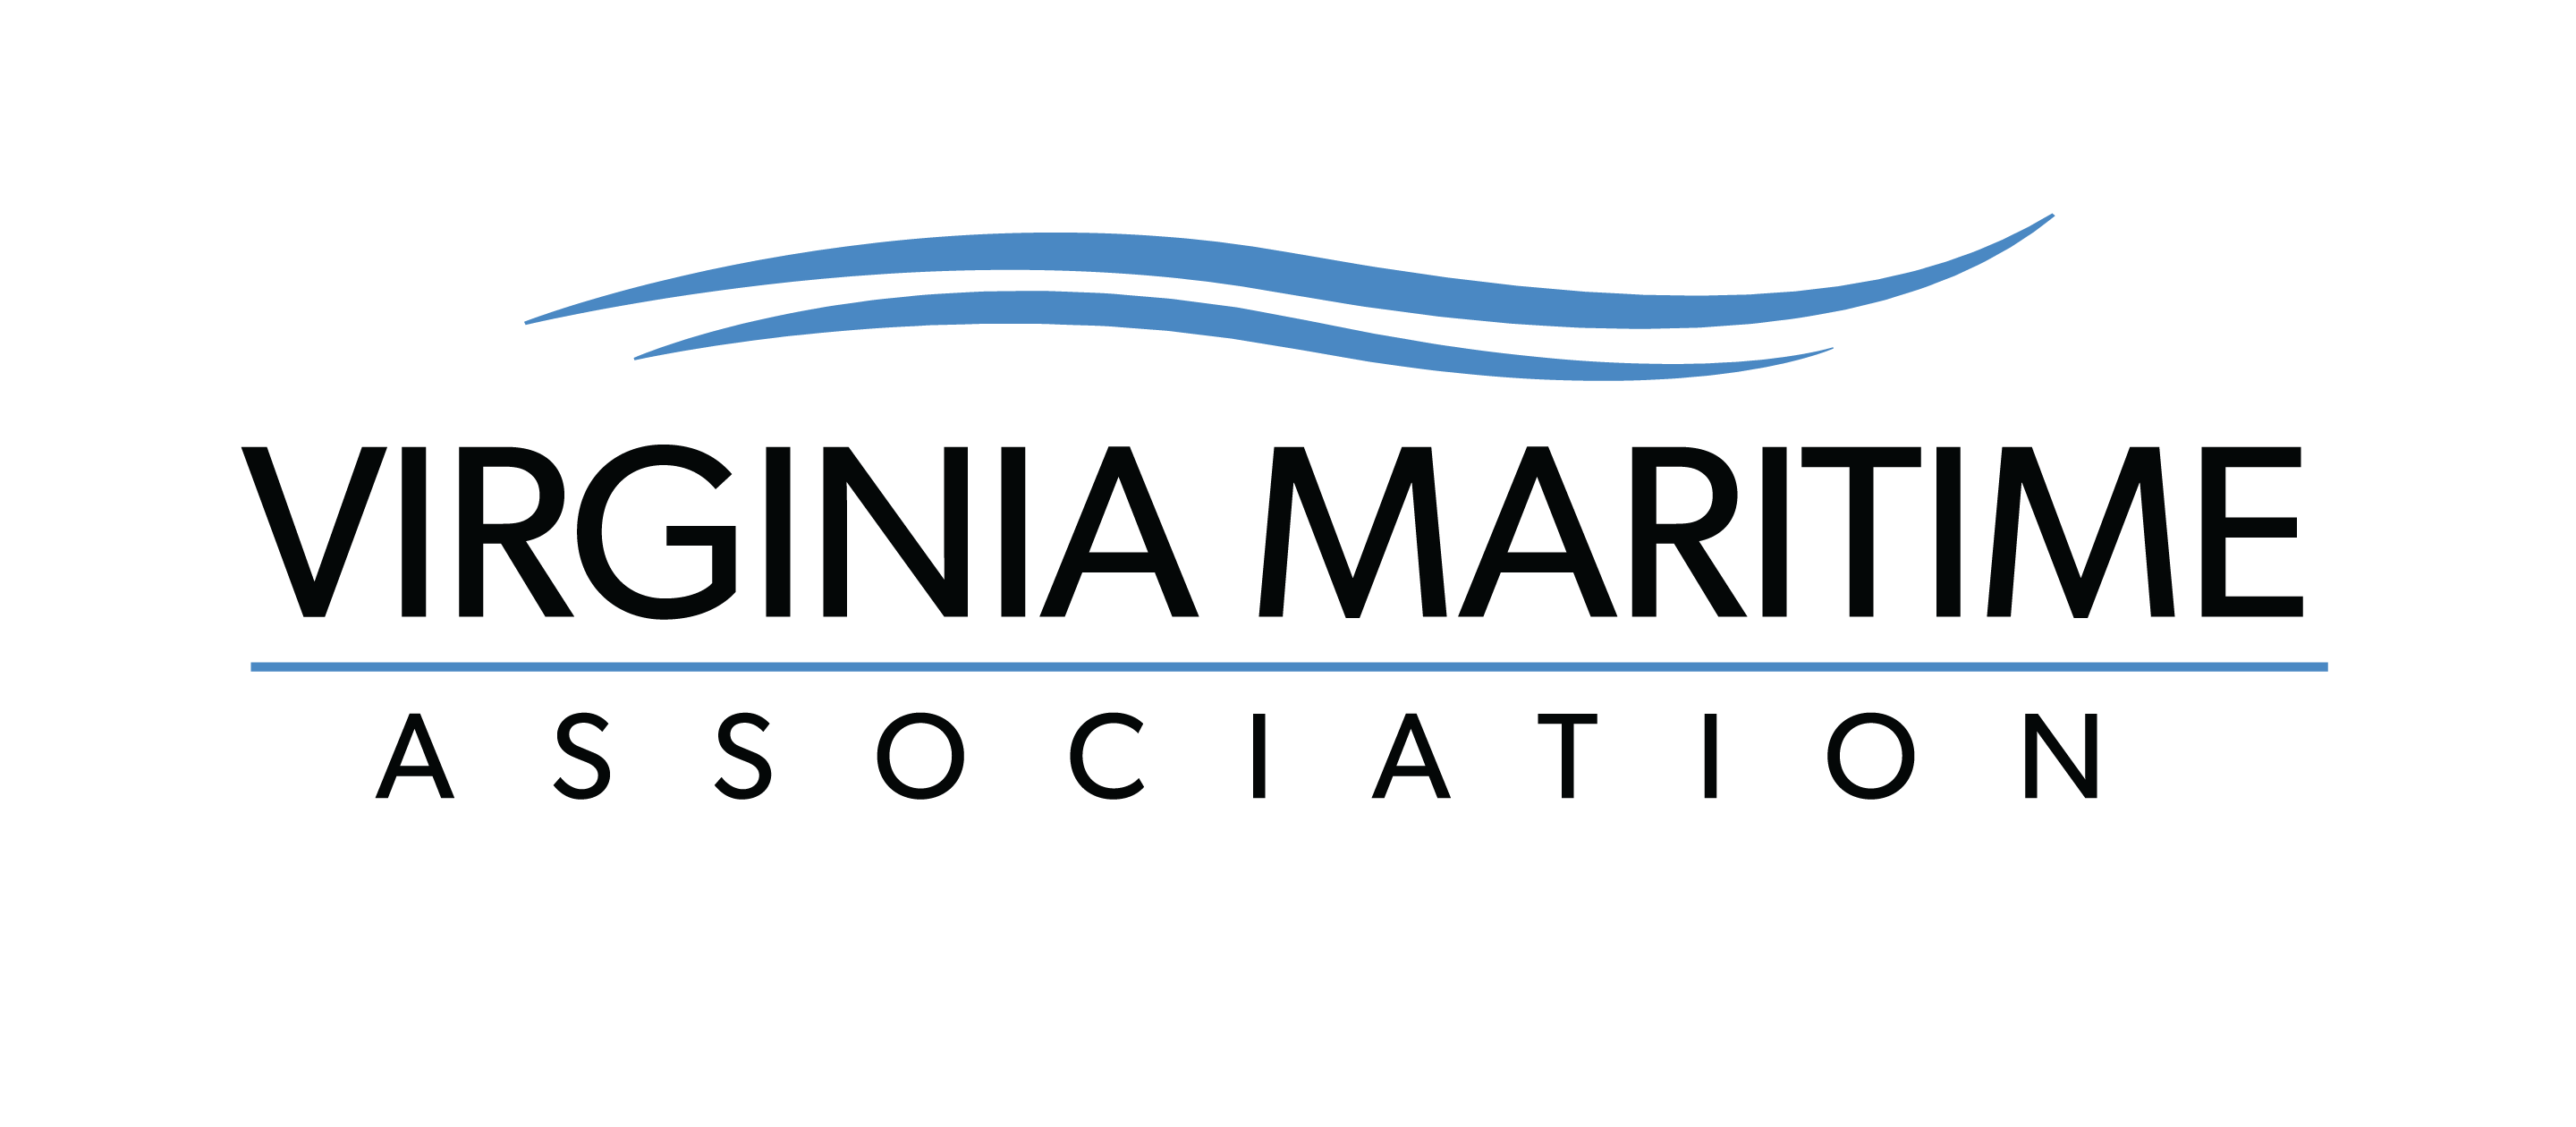 VA Maritime New Logo - Horizontal